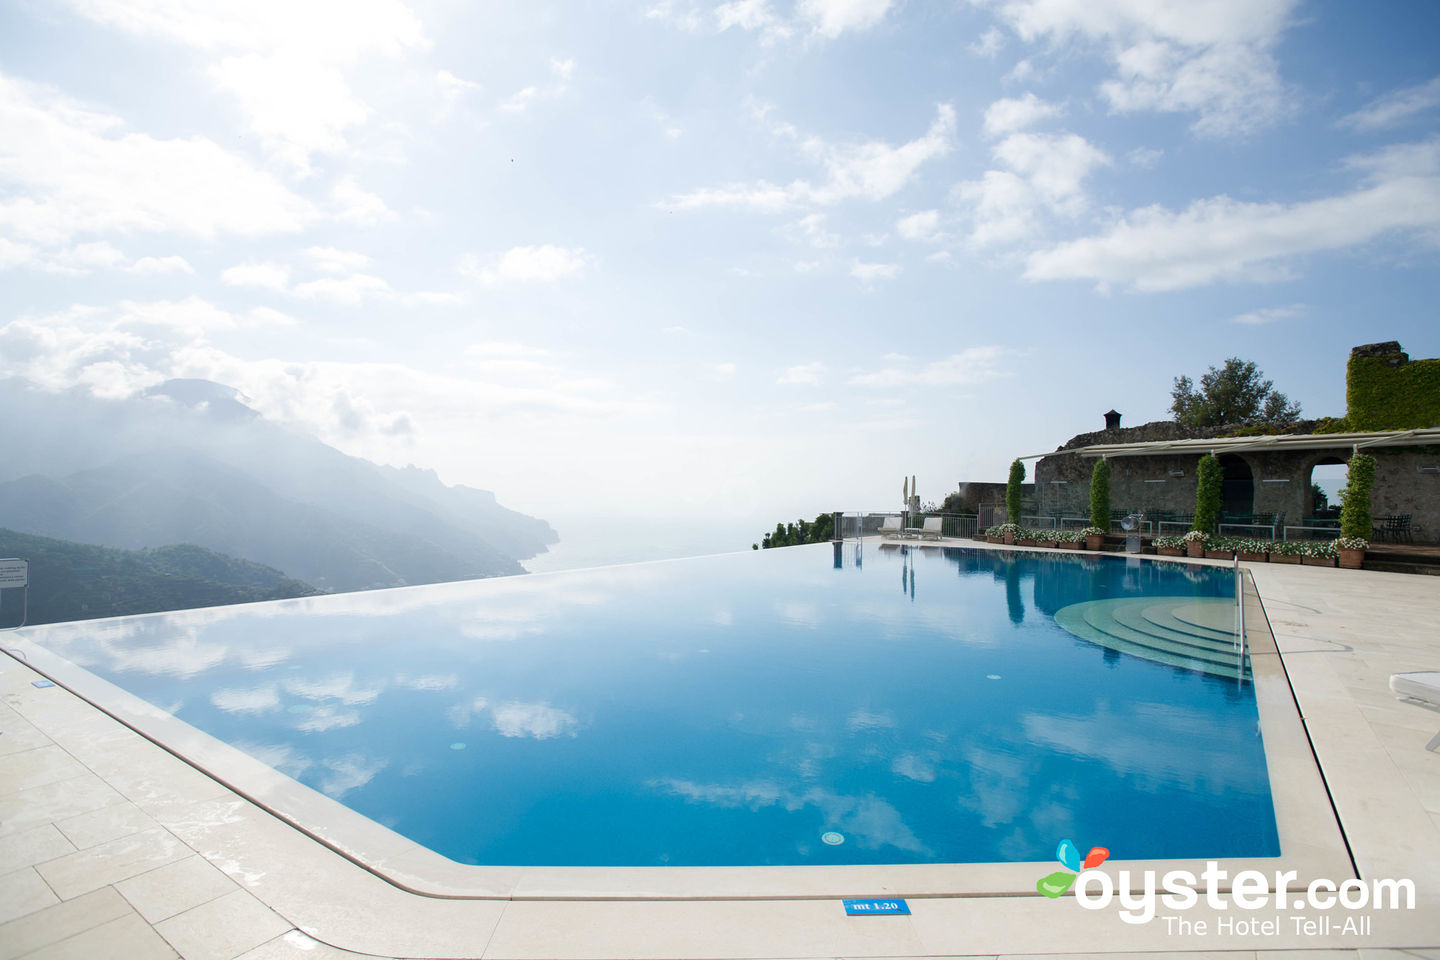 Belmond Hotel Caruso - Ravello, Amalfi Coast, Italy - Exclusive 5 Star  Luxury Resort